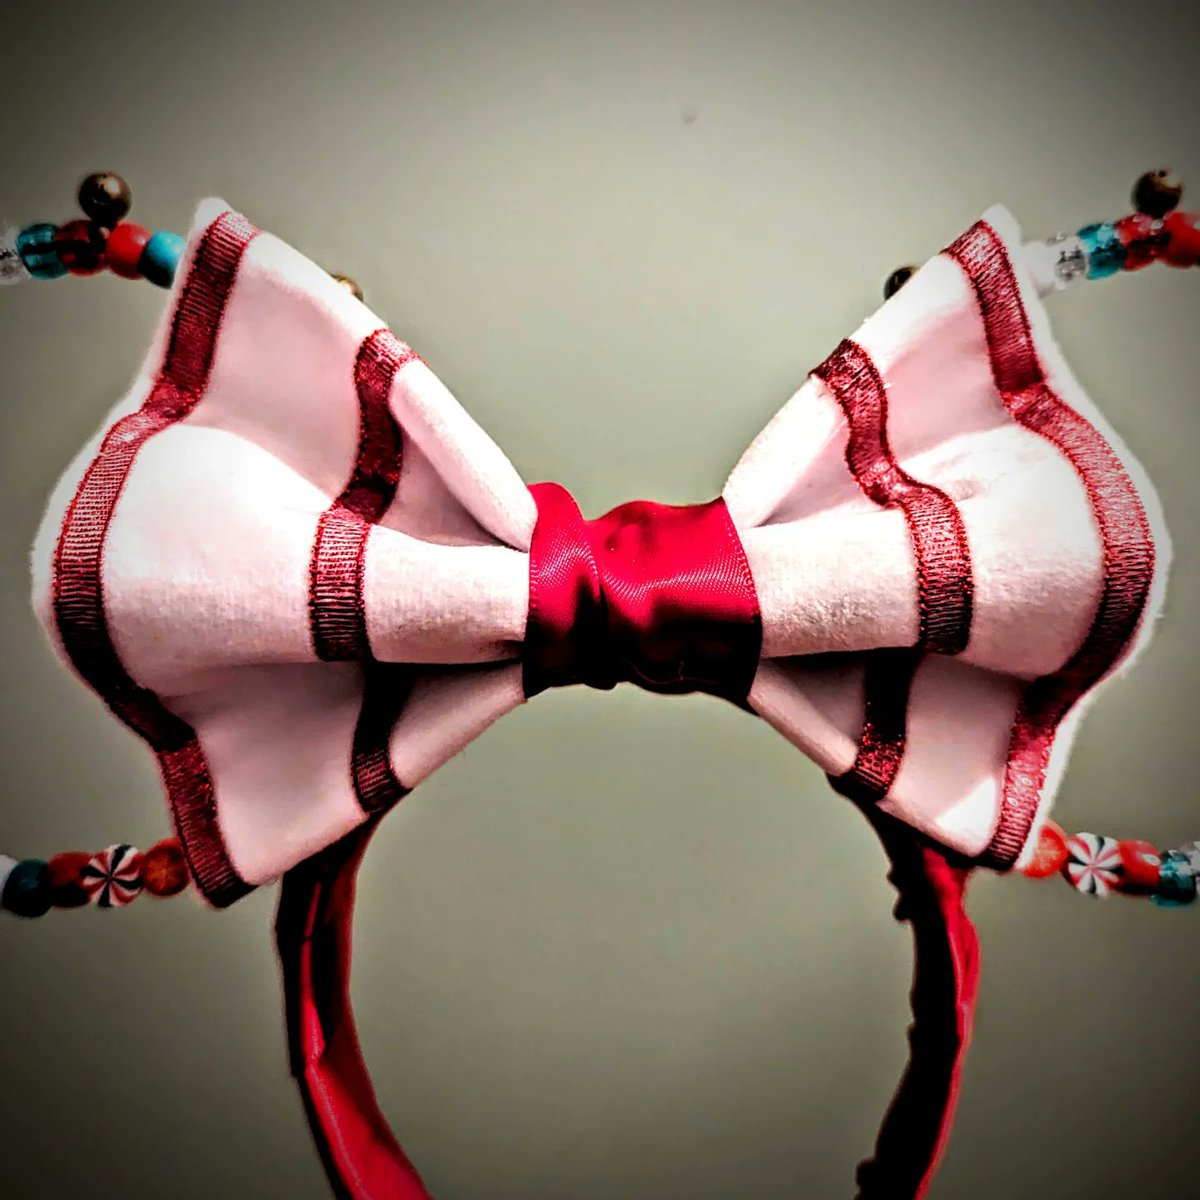 New Stock! Christmas Beaded Wire Mouse Ears £28.99 katesearresistibles.etsy.com #christmas #holidaysarecoming #handmadegift #disney #mickeyears #disneyadult #xmas